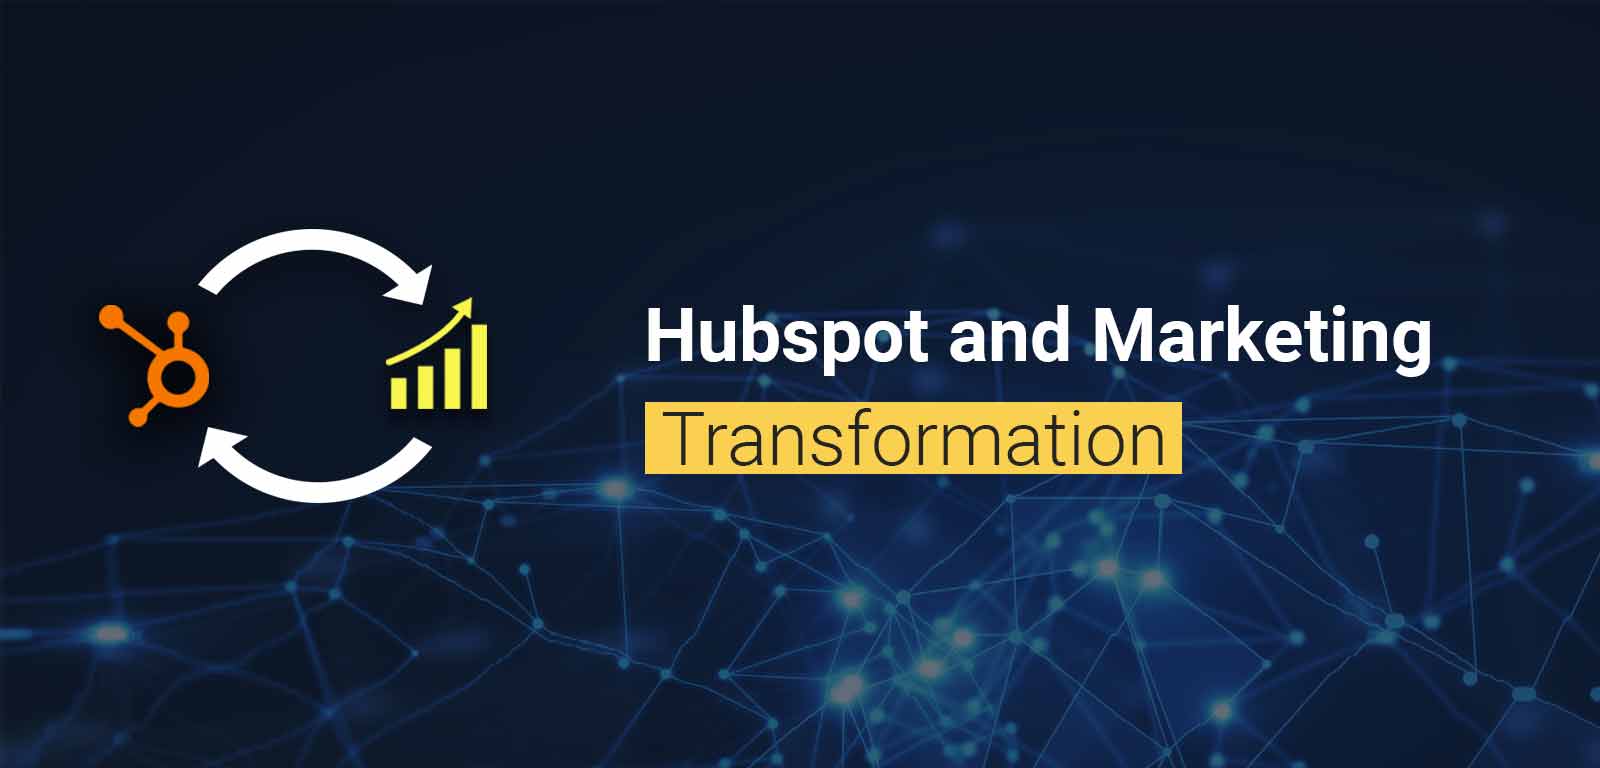 Hubspot and Marketing Transformation